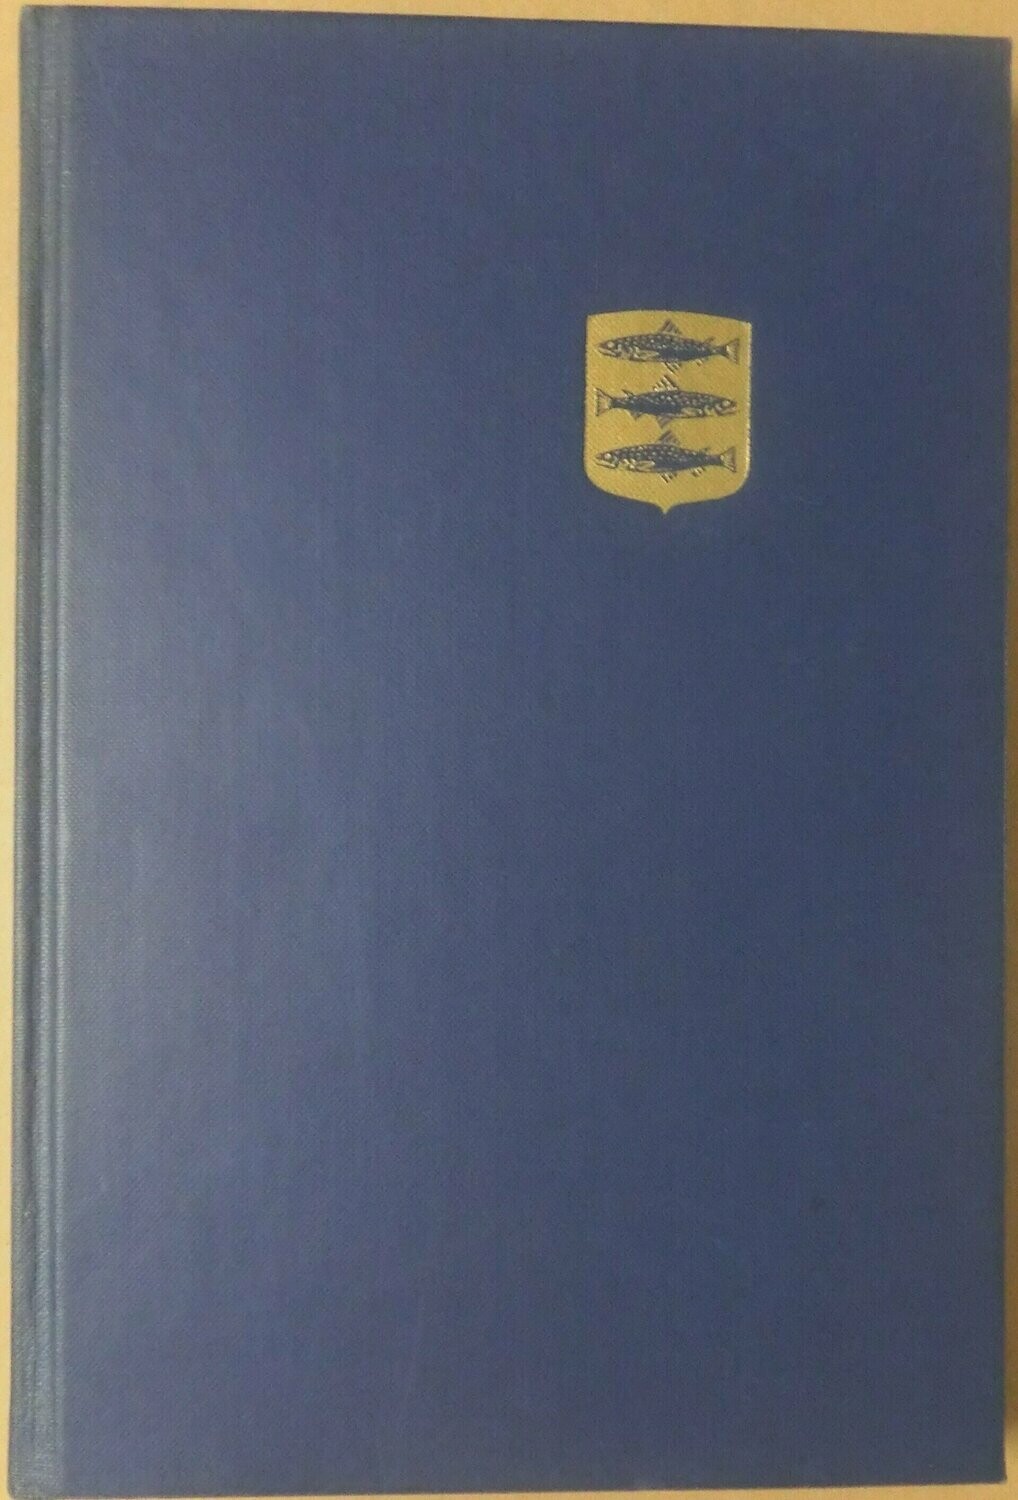 STF årsskrift 1969 - Ångermanland